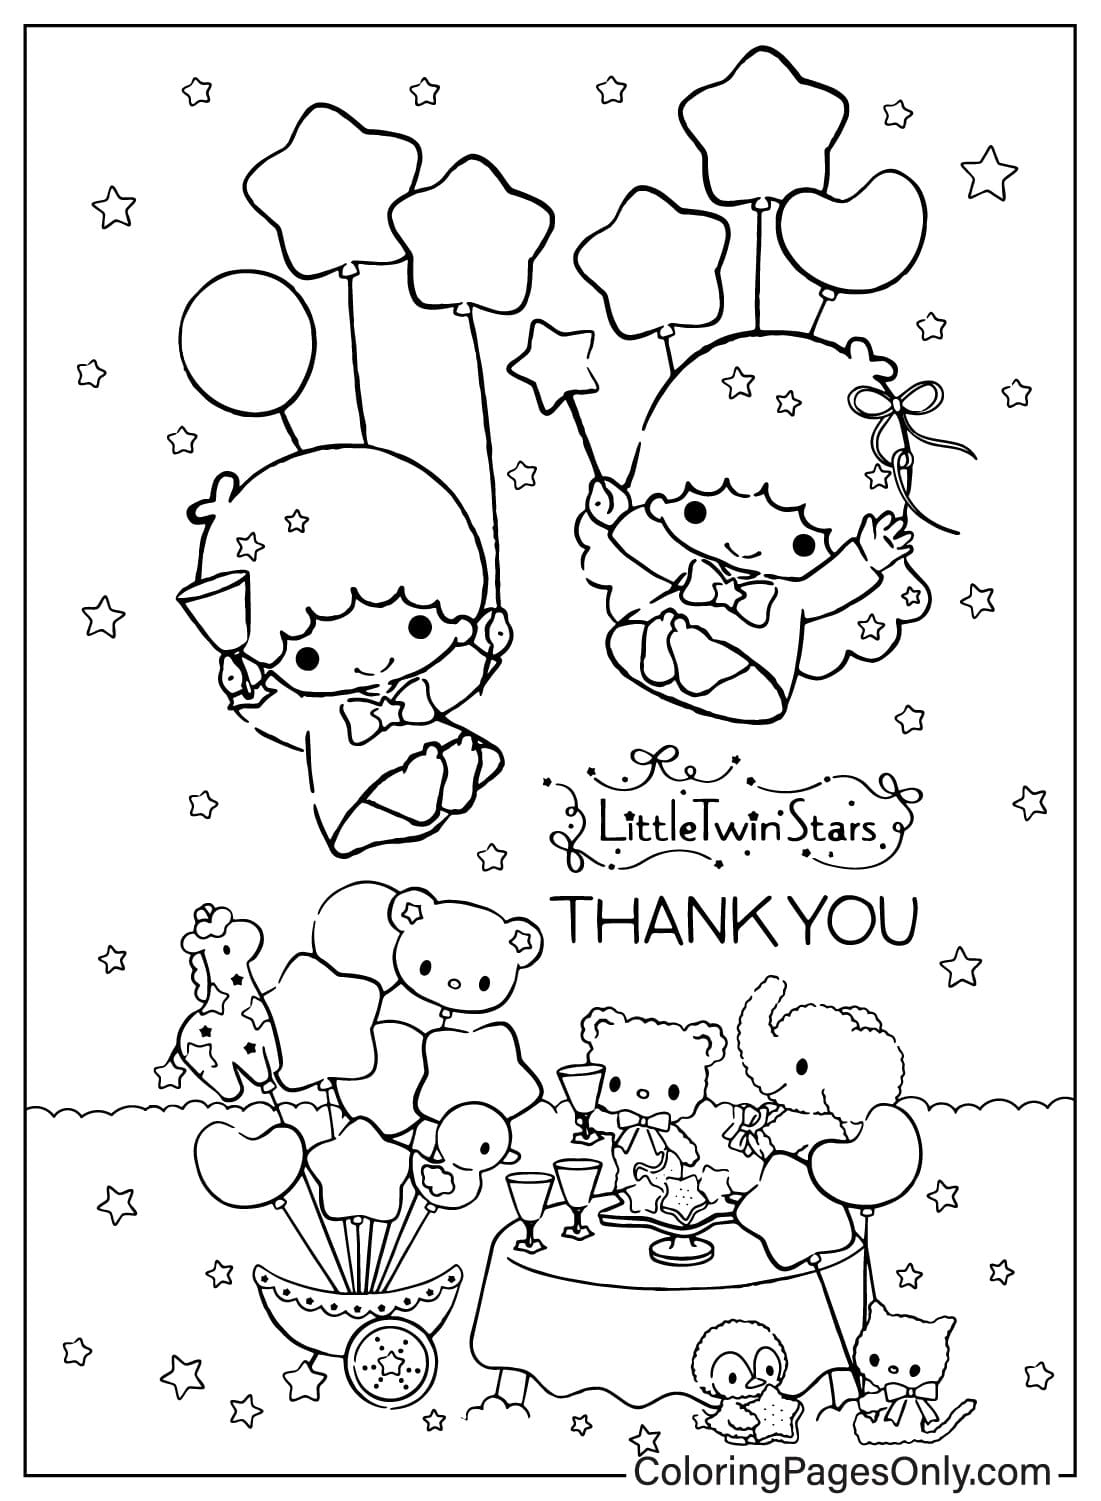 Página para colorear de Little Twin Stars gratis de Little Twin Stars